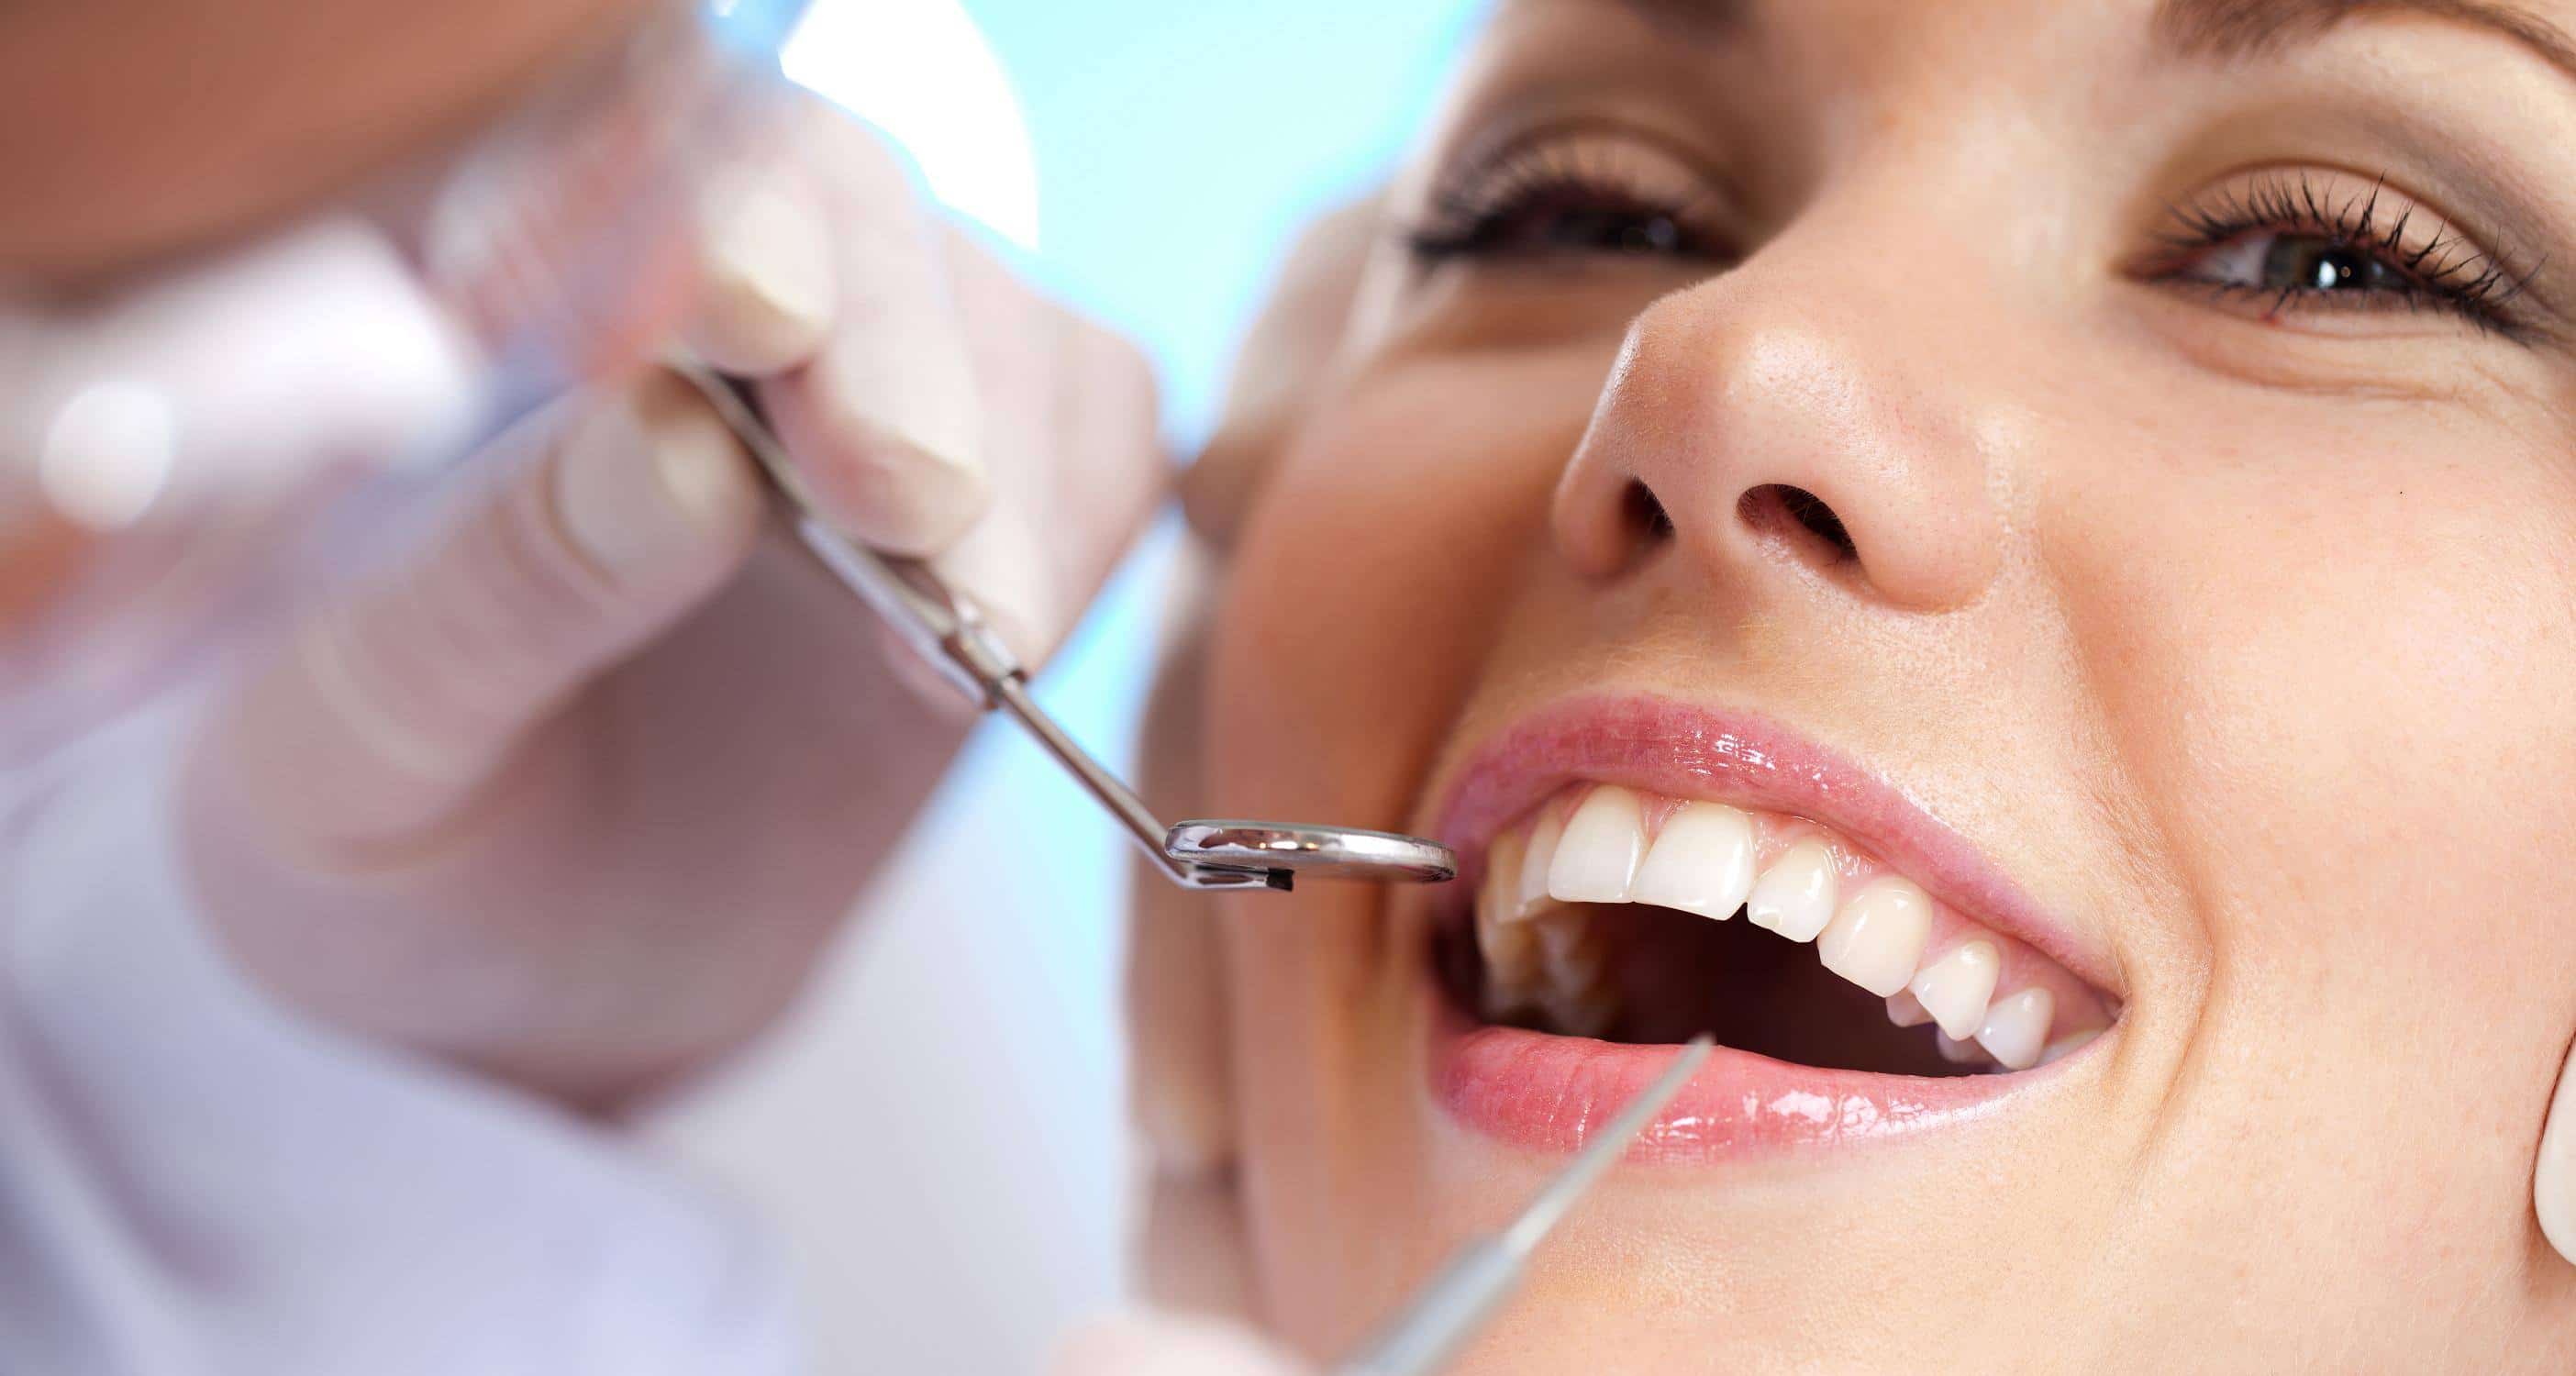 Dental Hygiene / Periodontal Health